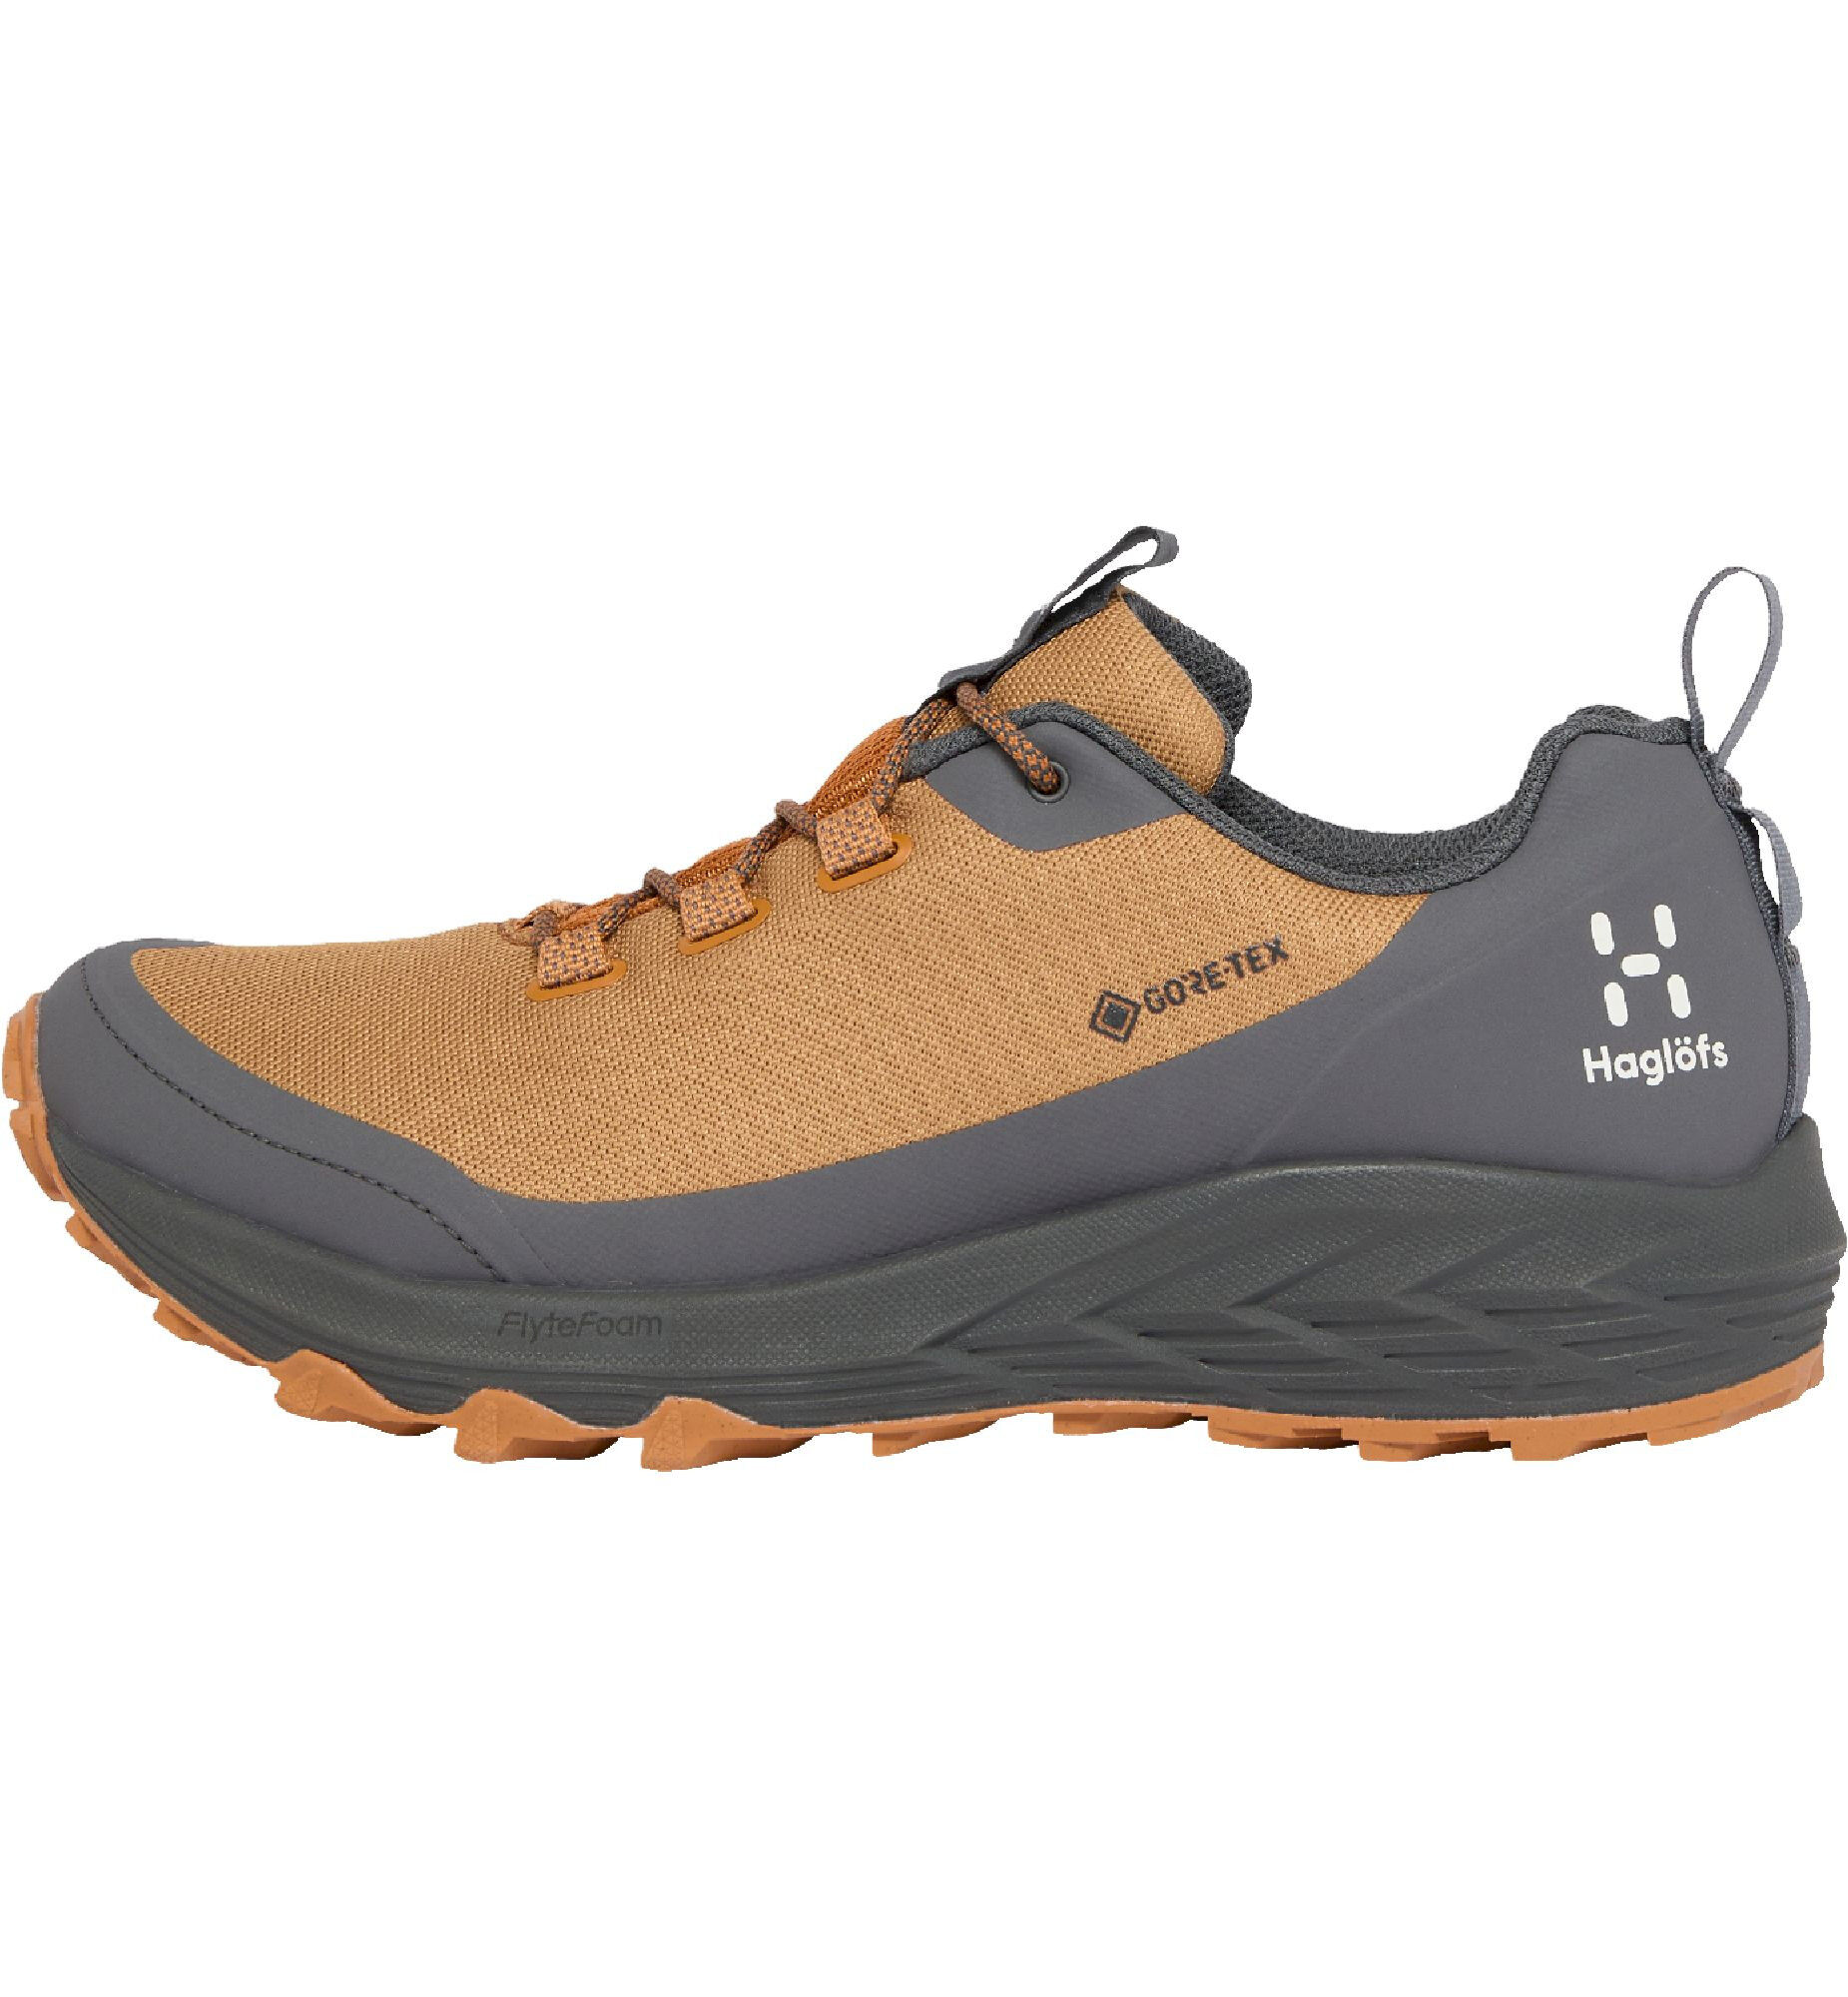 Haglöfs L.I.M FH GTX Low - Walking shoes - Men's